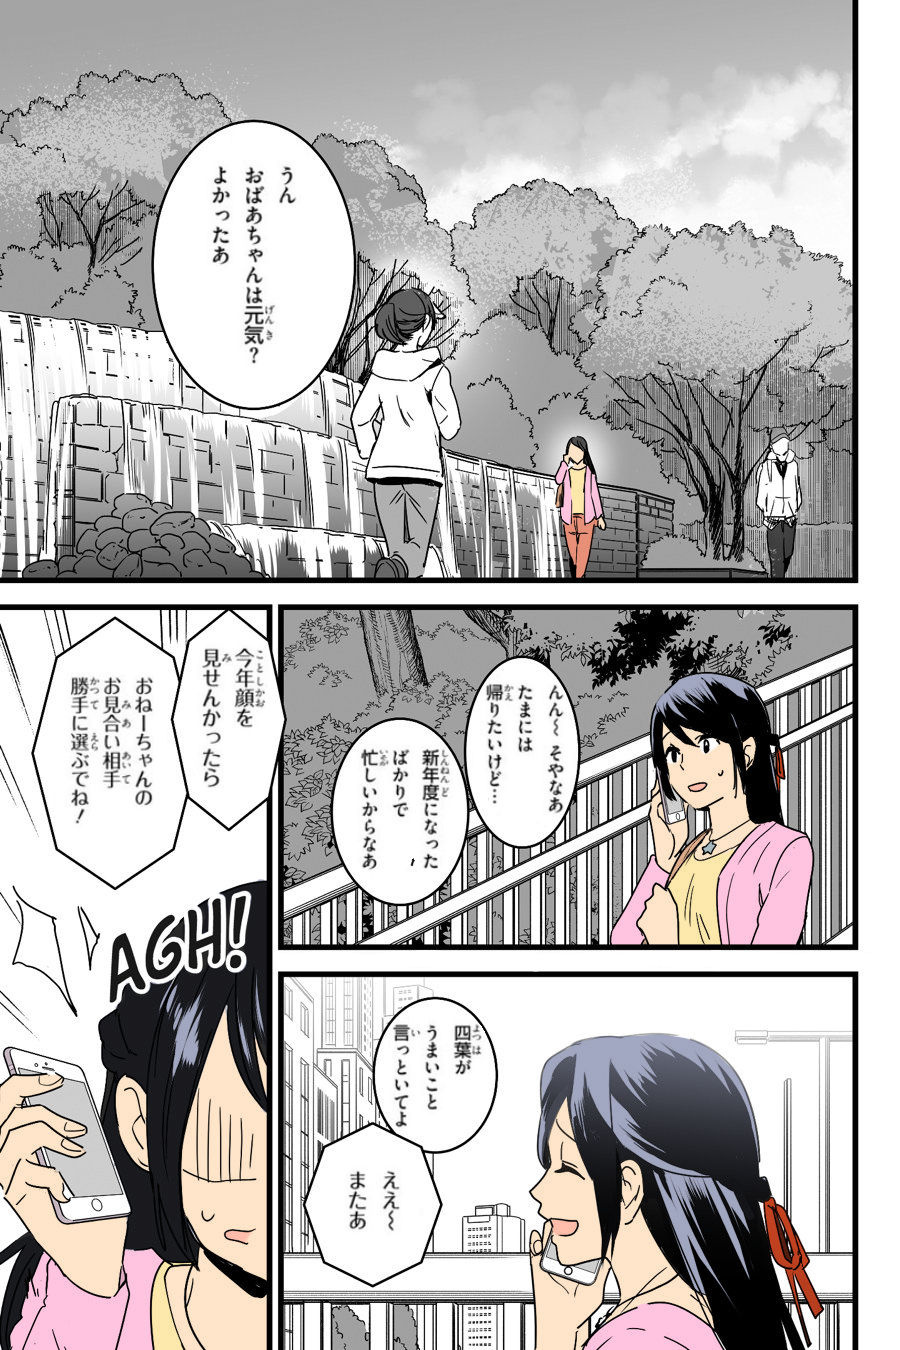 (SC2017 Winter) [Syukurin] Mitsuha ~Netorare~ (Kimi no na wa : After Story) Colorized] (Colorized by mikakucoloring) - Page 11